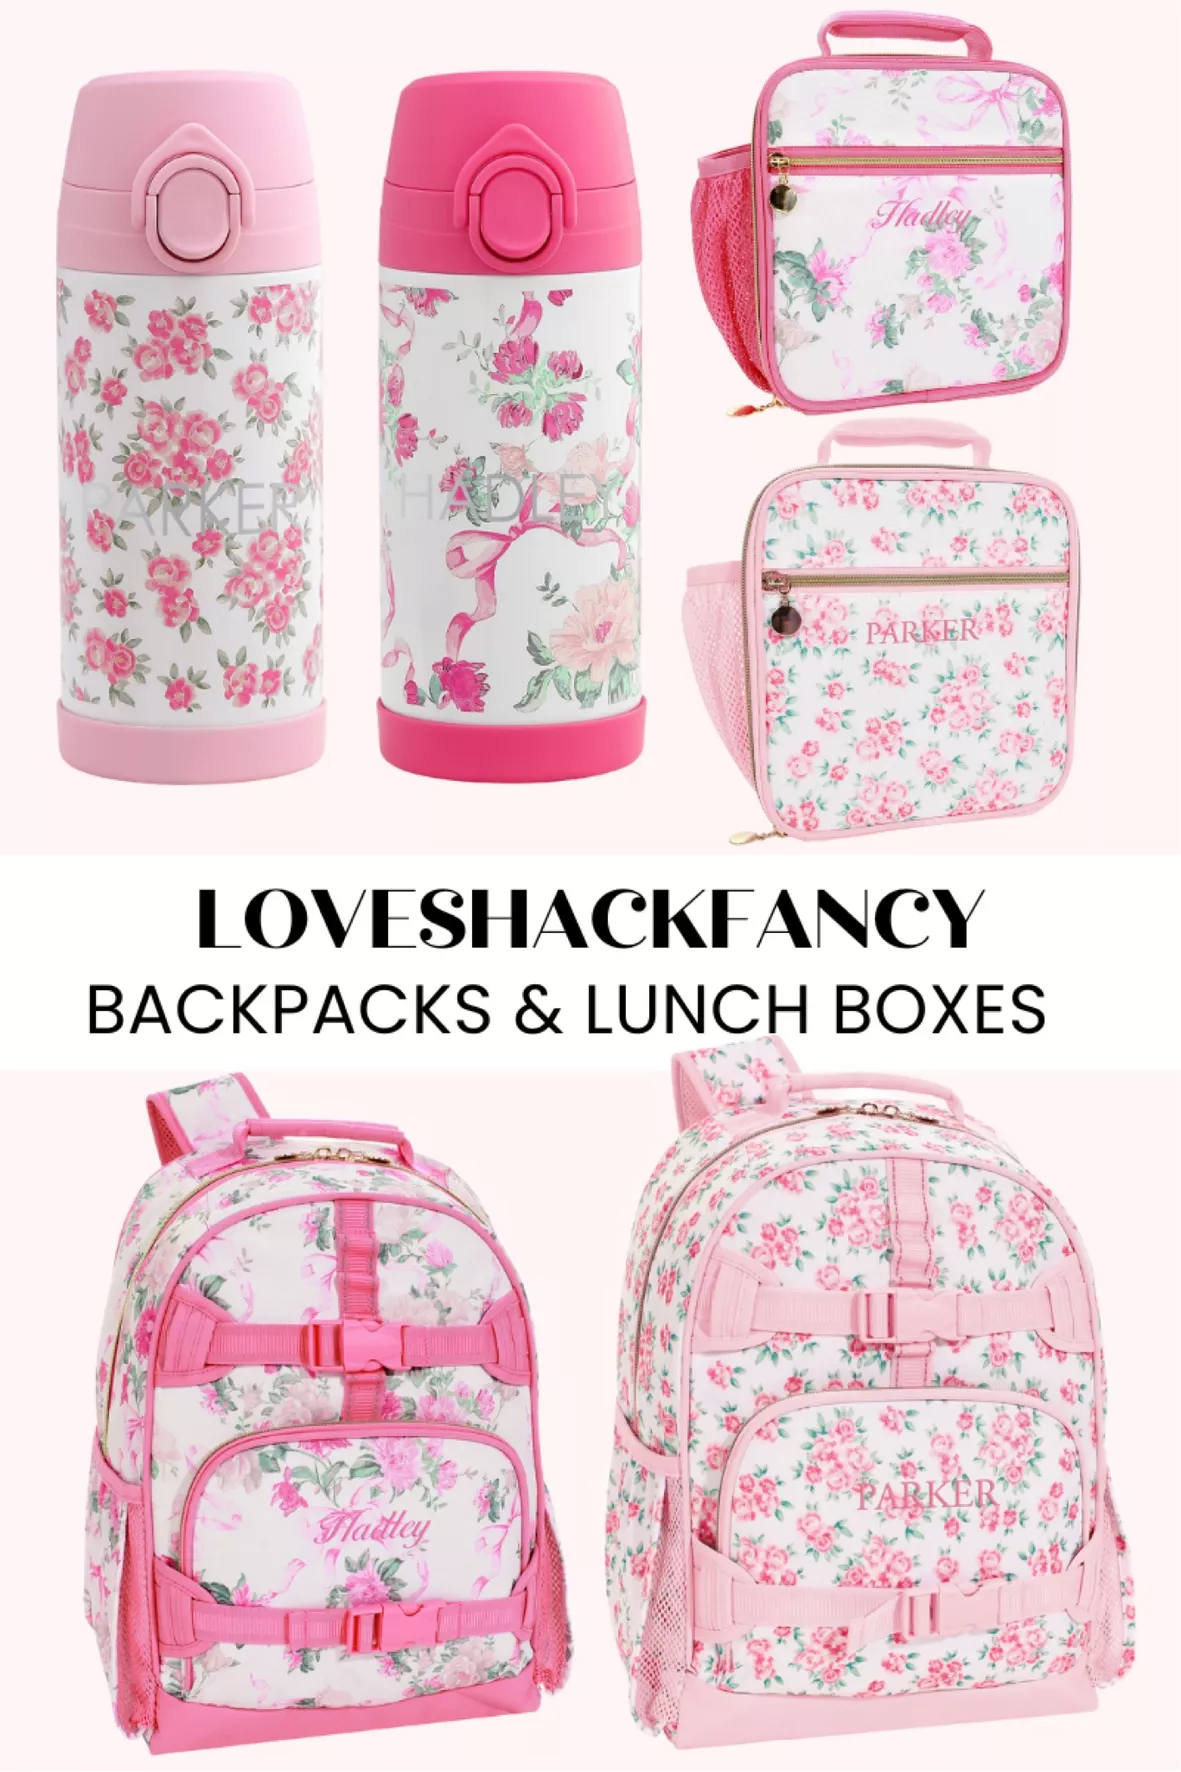 Mackenzie LoveShackFancy Antoinette Floral Lunch Boxes